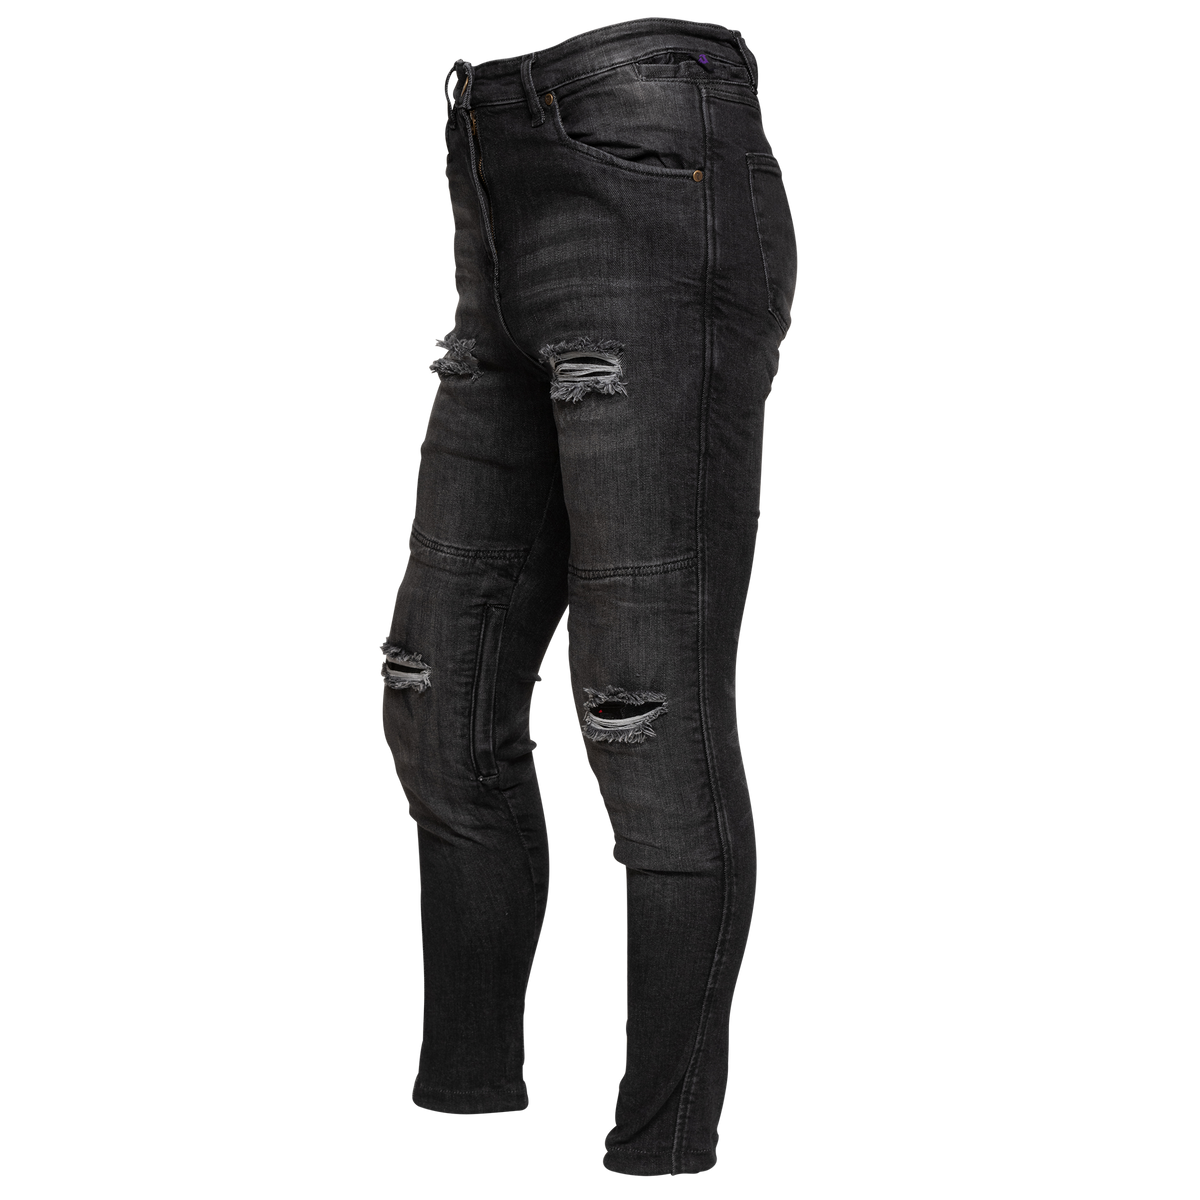 Motorcycle riding pants charcoal black color slim-fit